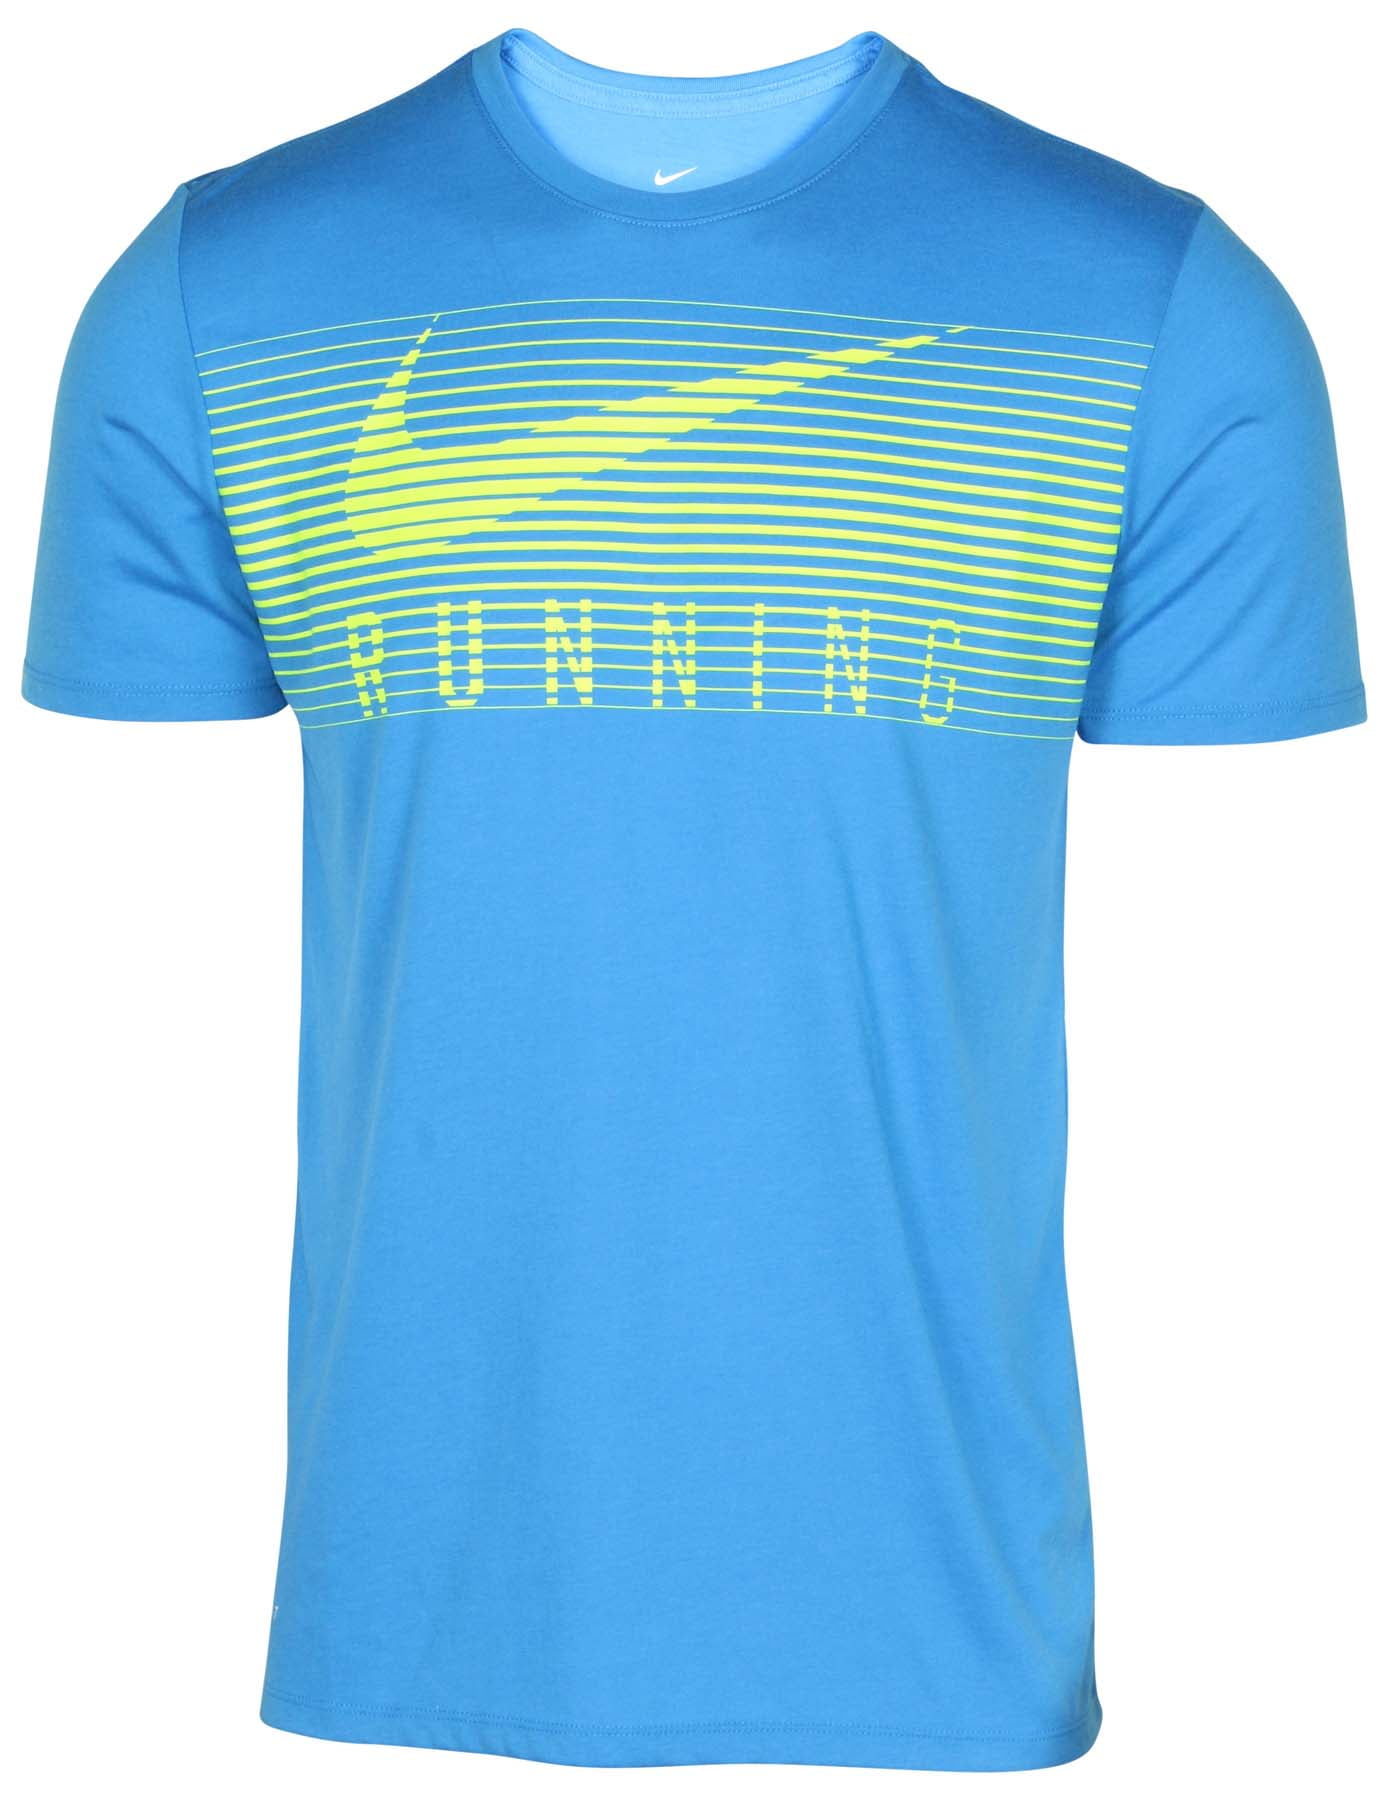 Nike Dri-Fit Double Swoosh Running Blue - Walmart.com